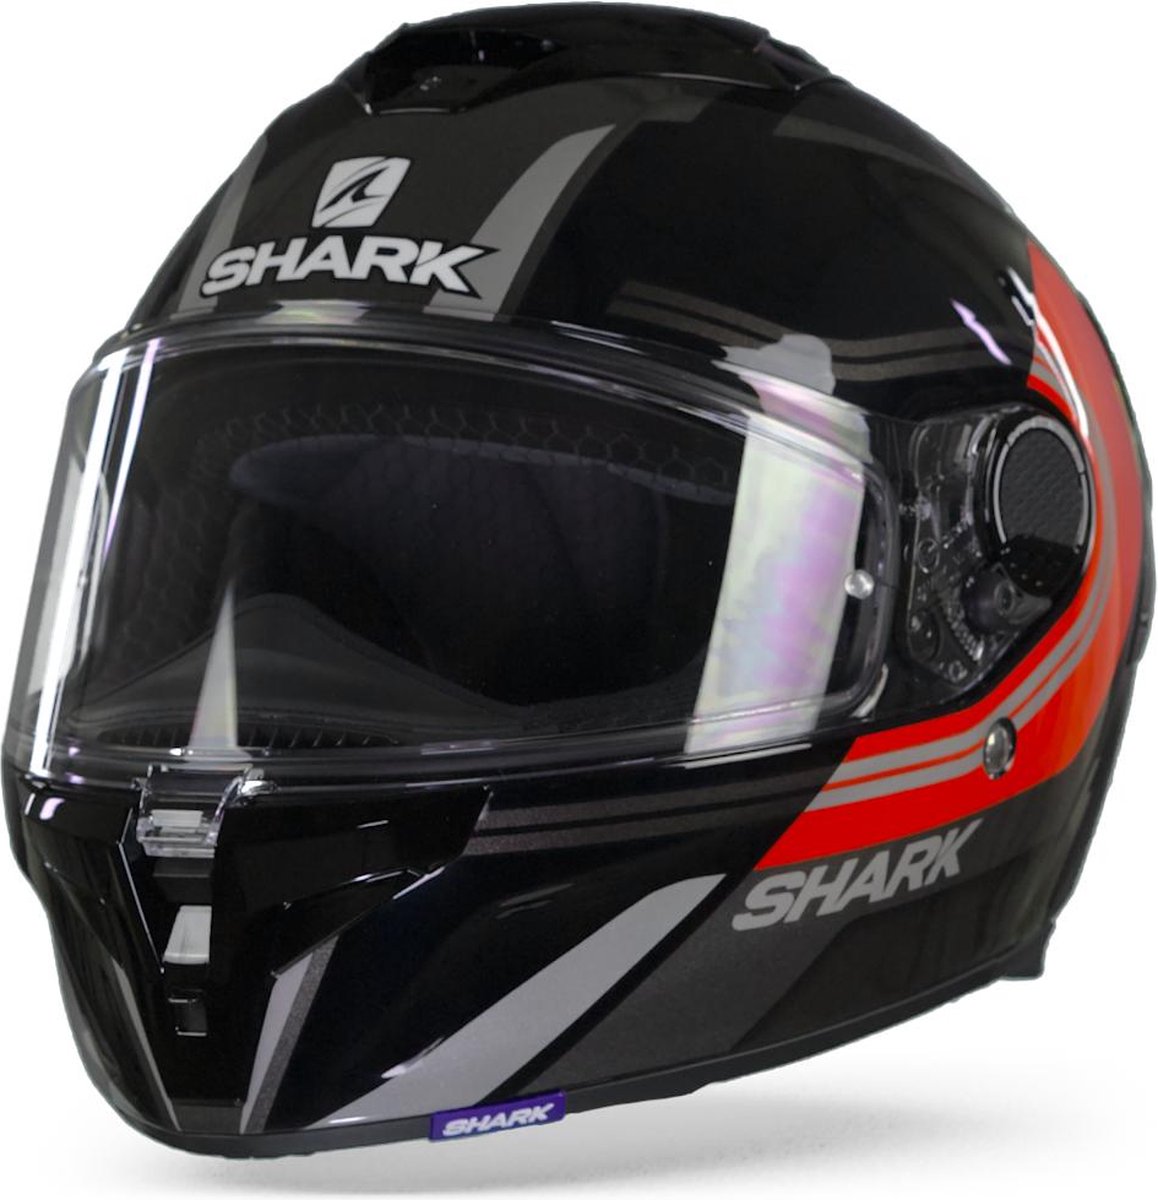 SHARK SPARTAN GT TRACKER BLACK RED SILVER FULL FACE HELMET S - Maat S - Helm